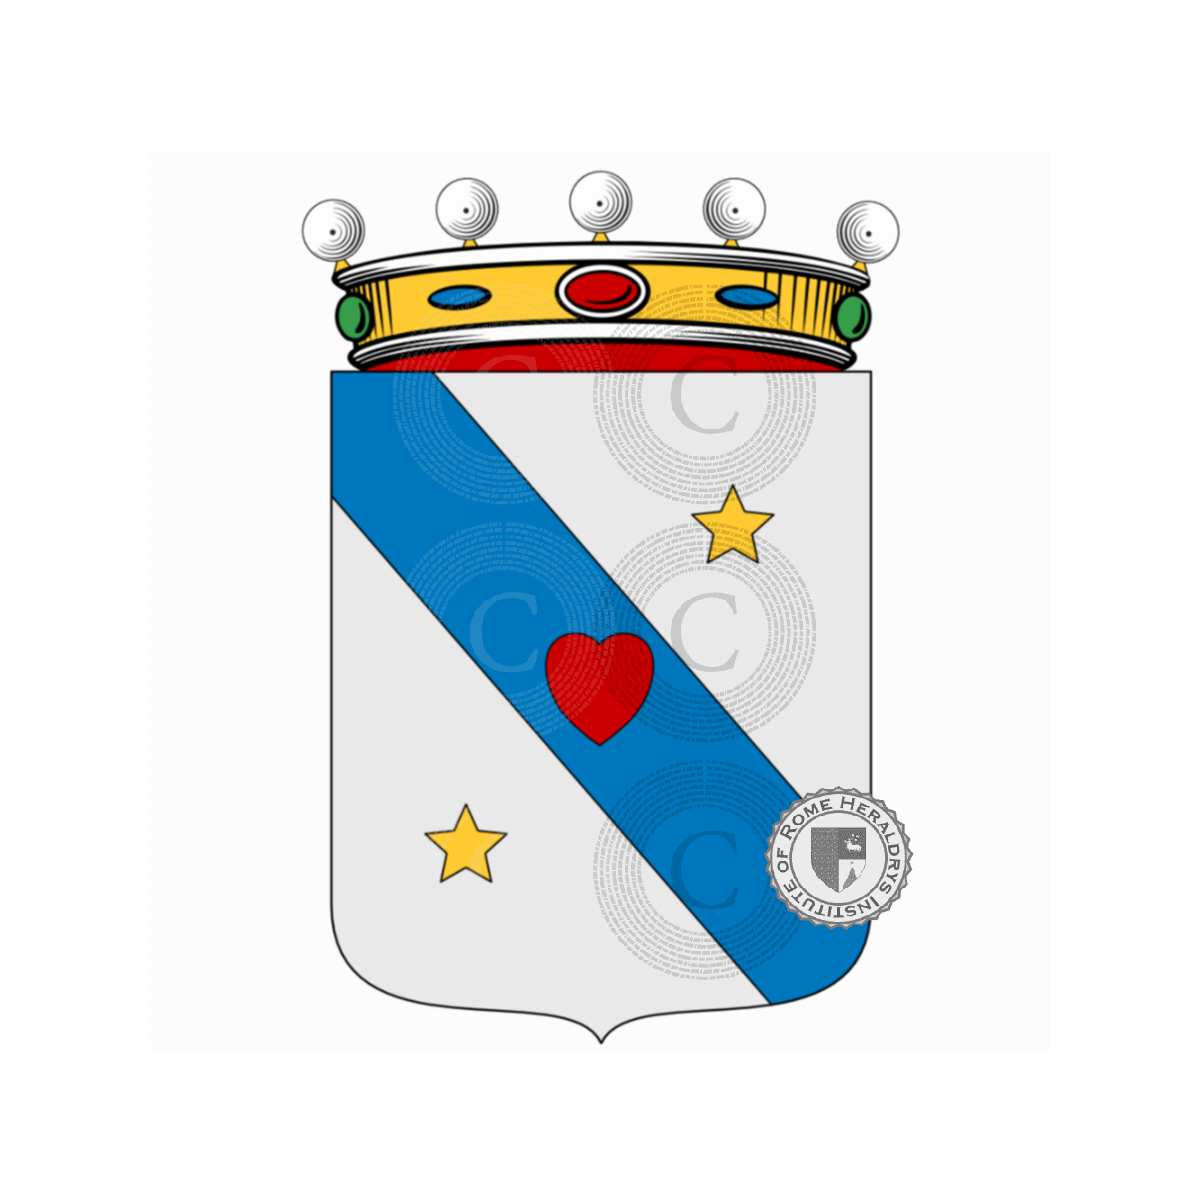 Wappen der Familieguzzi    